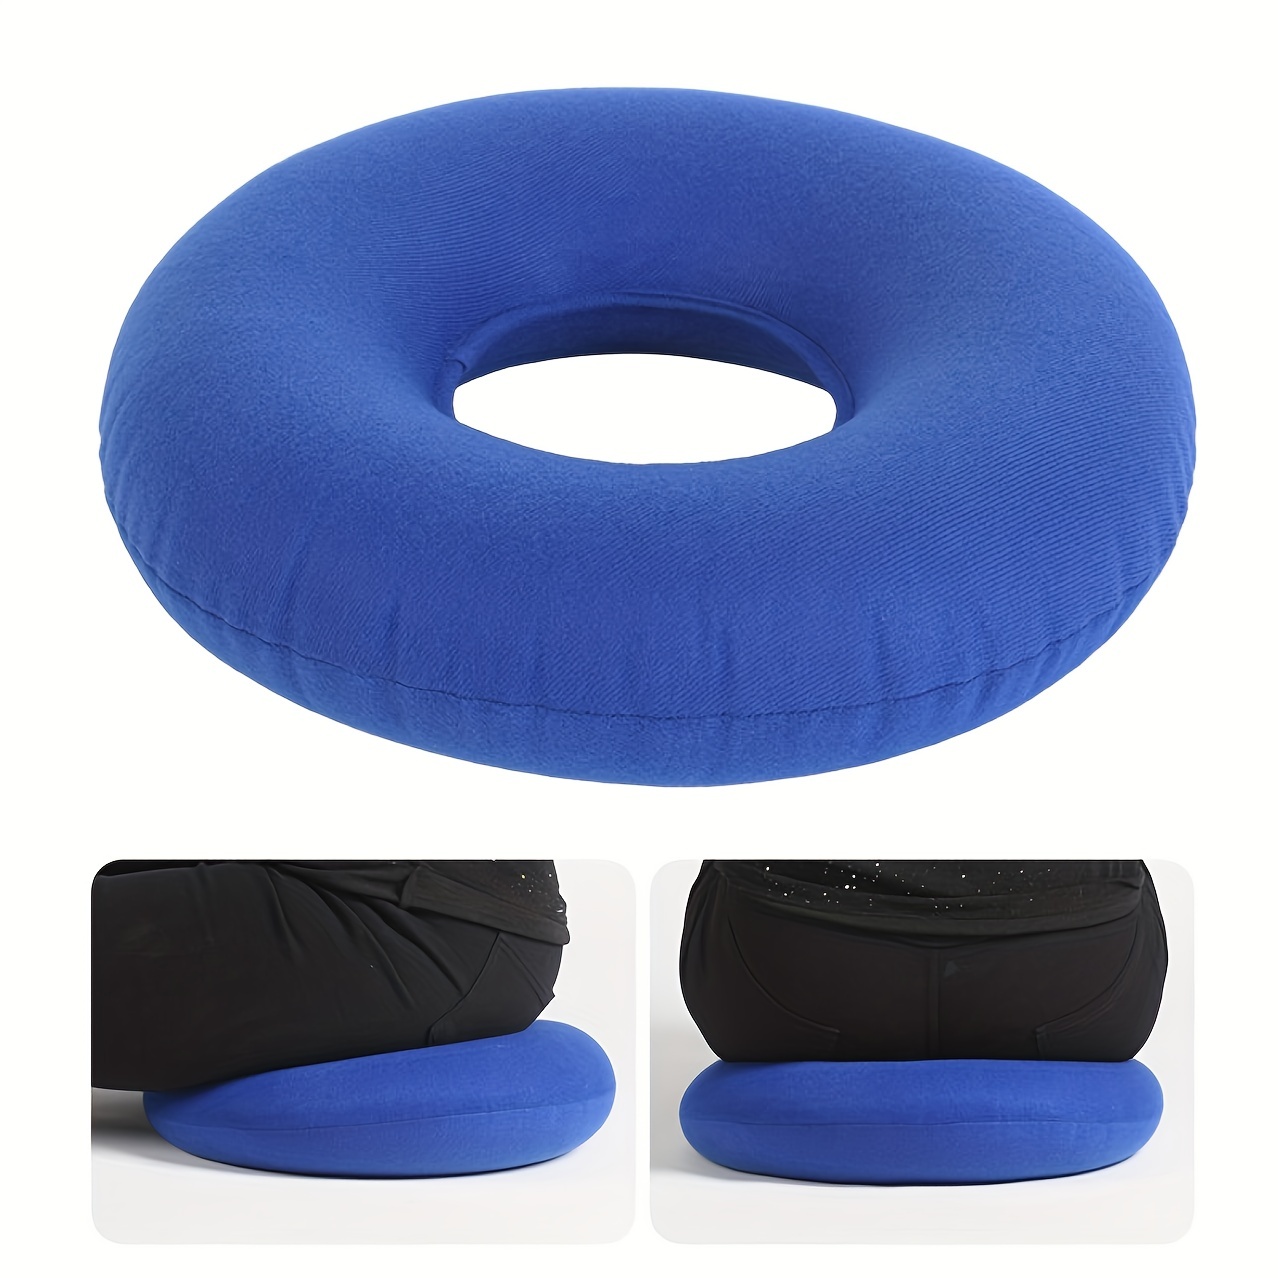 Donut Tailbone Pillow, Slow Rebound Memory Foam Hollow Seat